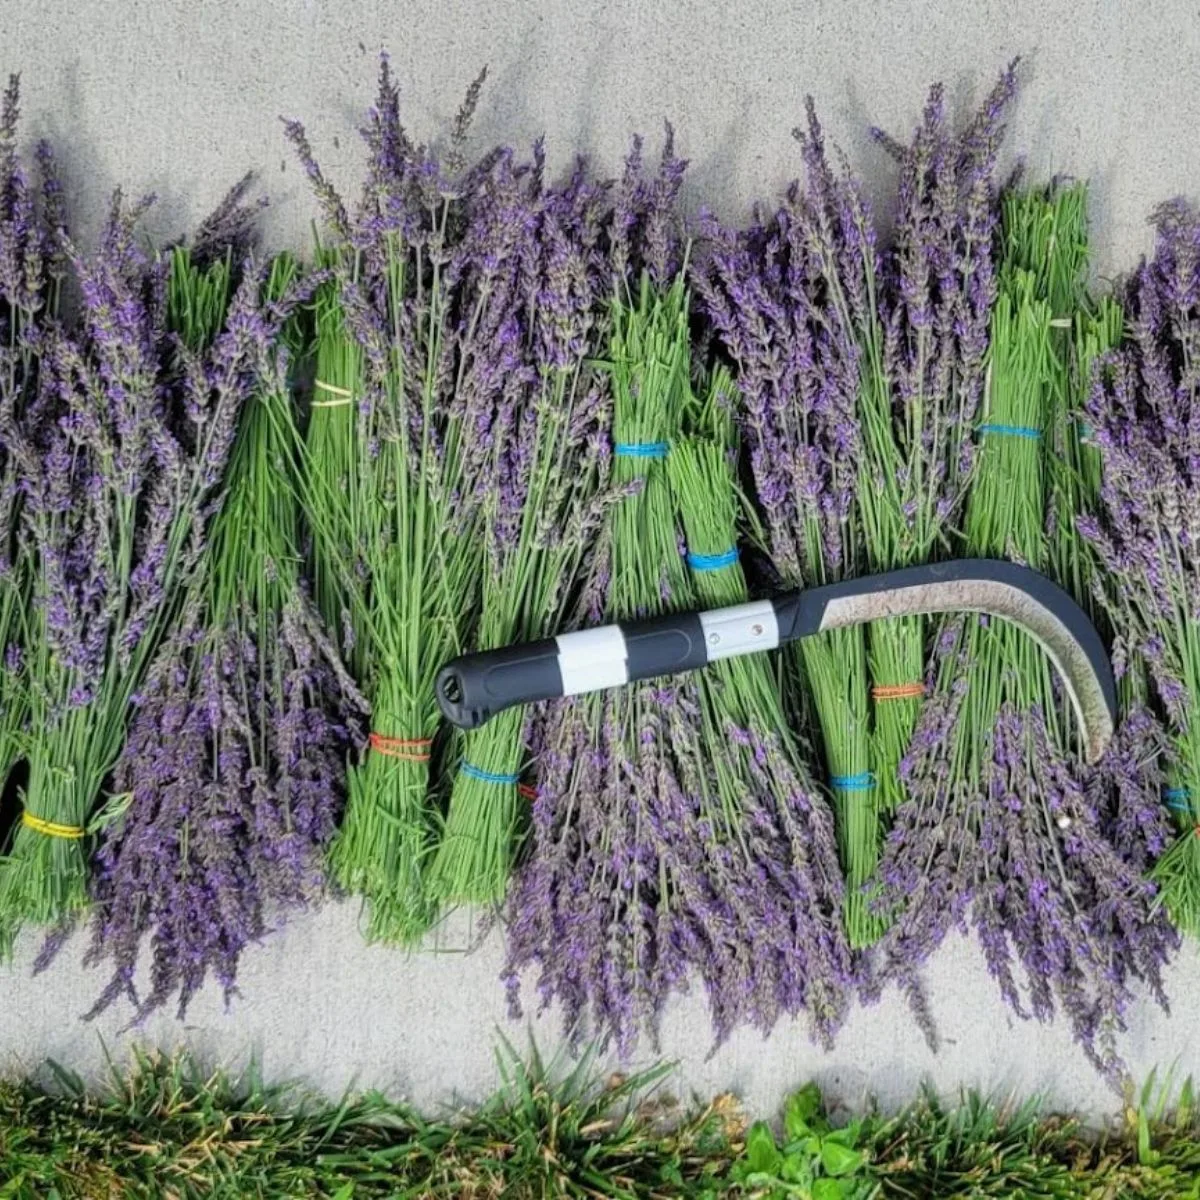 Lavender bundles laying on the sidewalk.